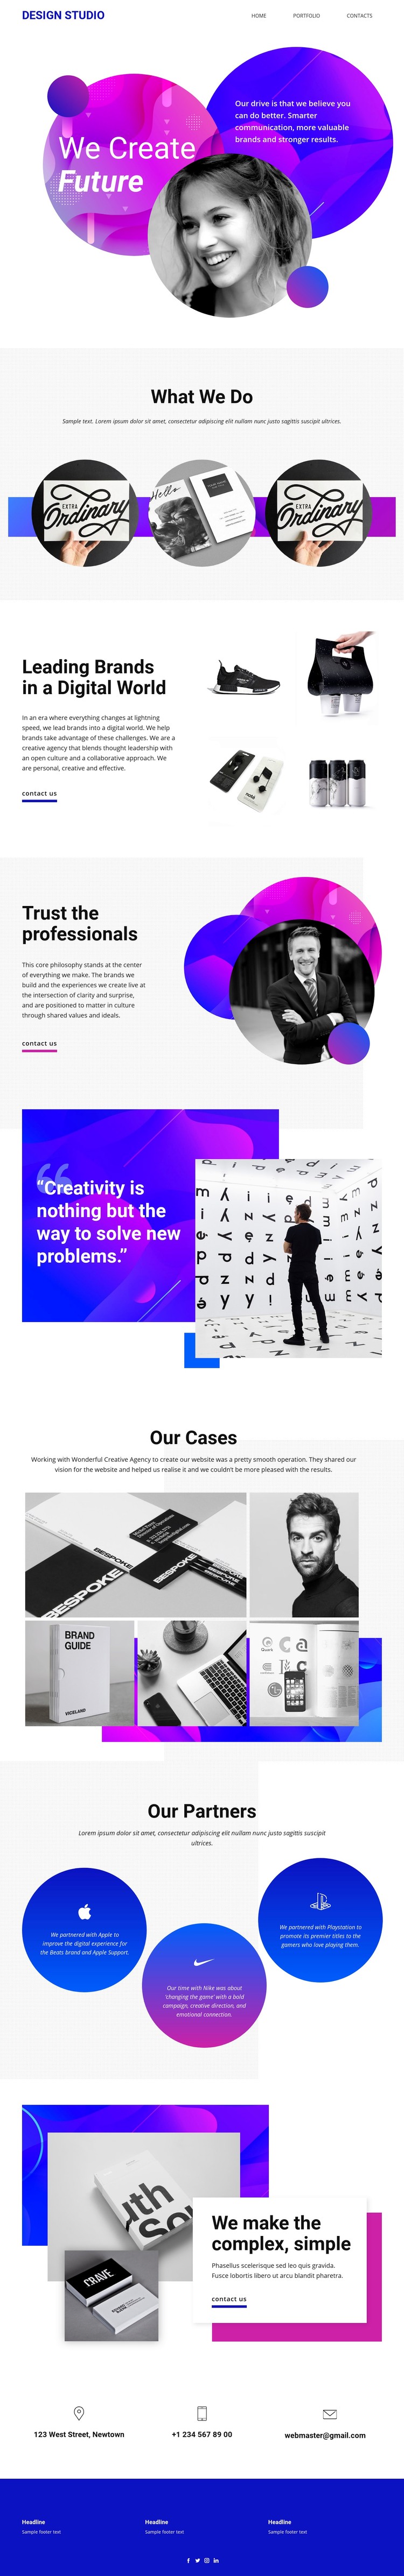 Content creation studio design Webflow Template Alternative